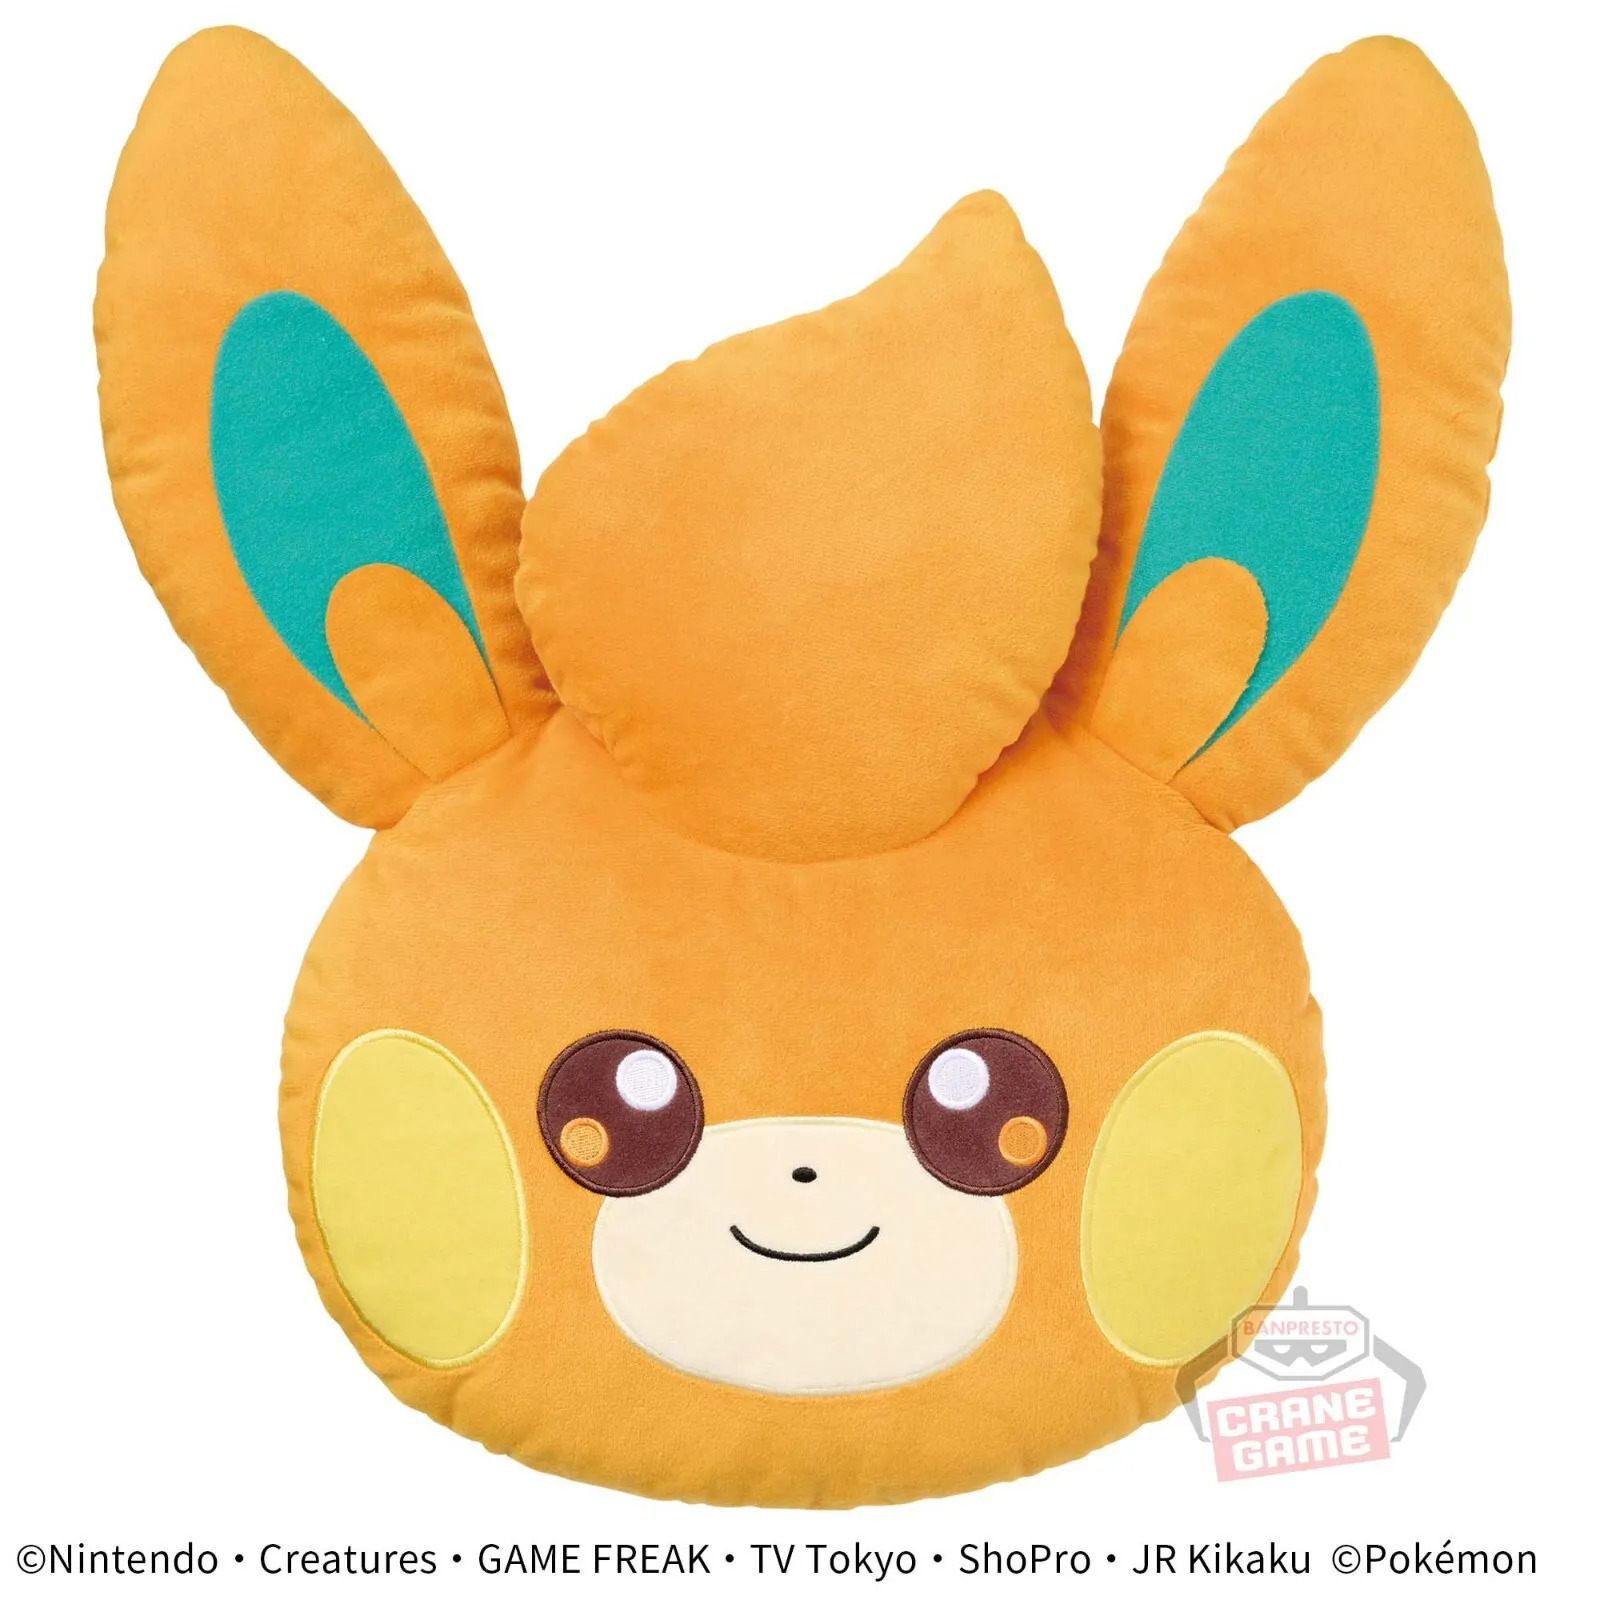 Pawmo “Pokemon” Big Face Cushion Pillow | Video Game Heaven